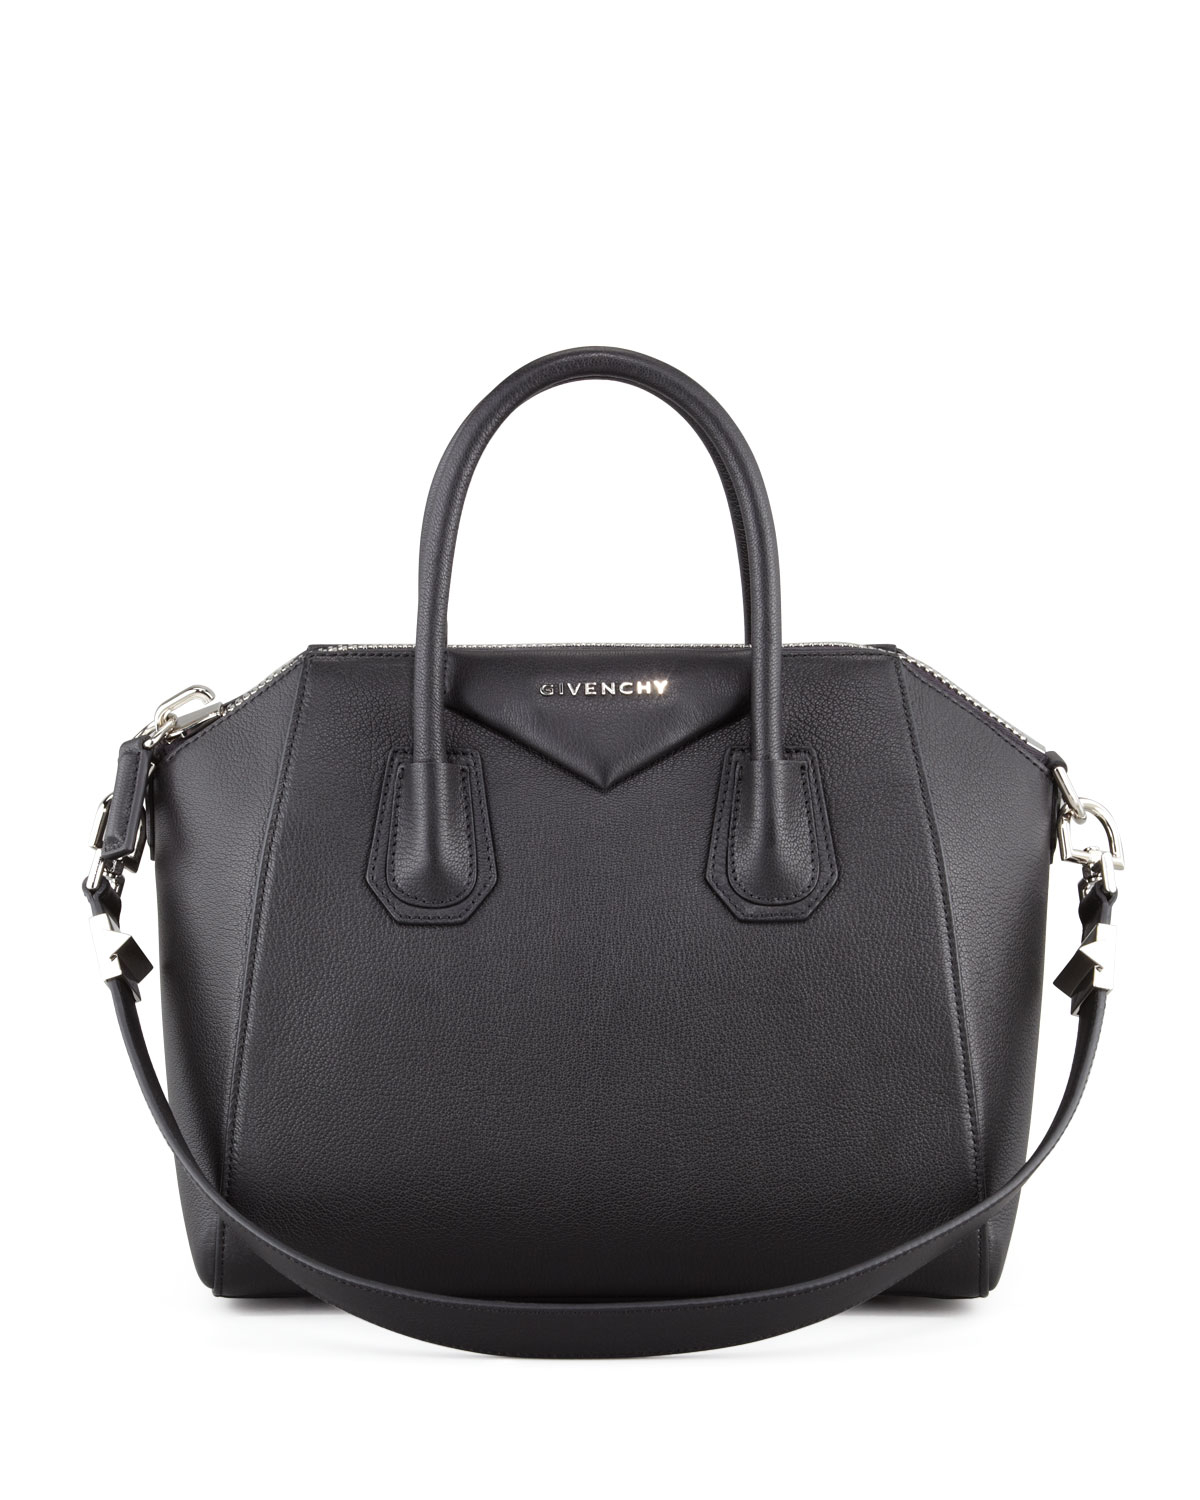 Givenchy Antigona Small Sugar Goatskin Satchel Bag in Black | Lyst